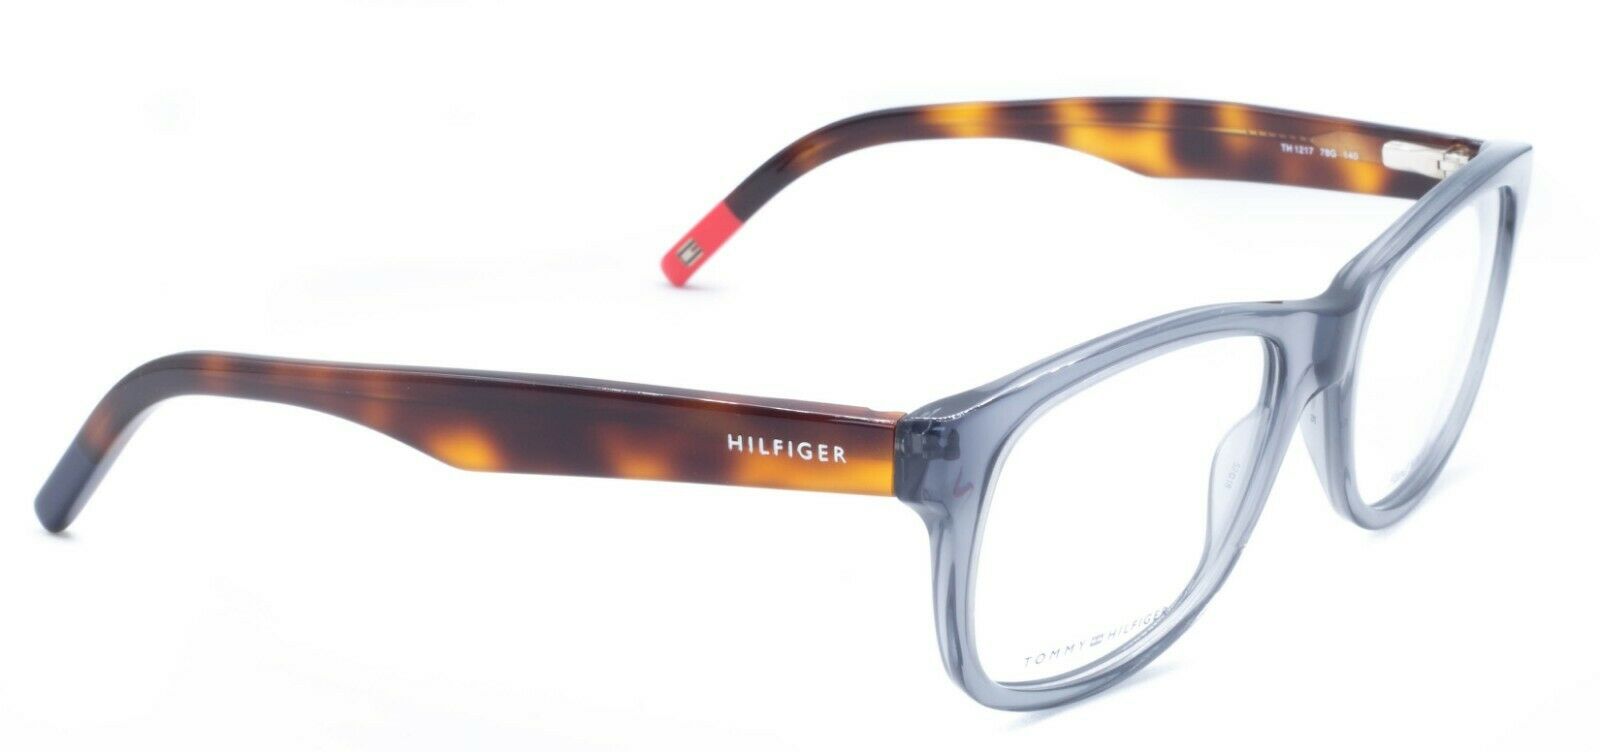 TOMMY HILFIGER TH 1217 78G 52mm Eyewear FRAMES Glasses RX Optical Eyeglasses New